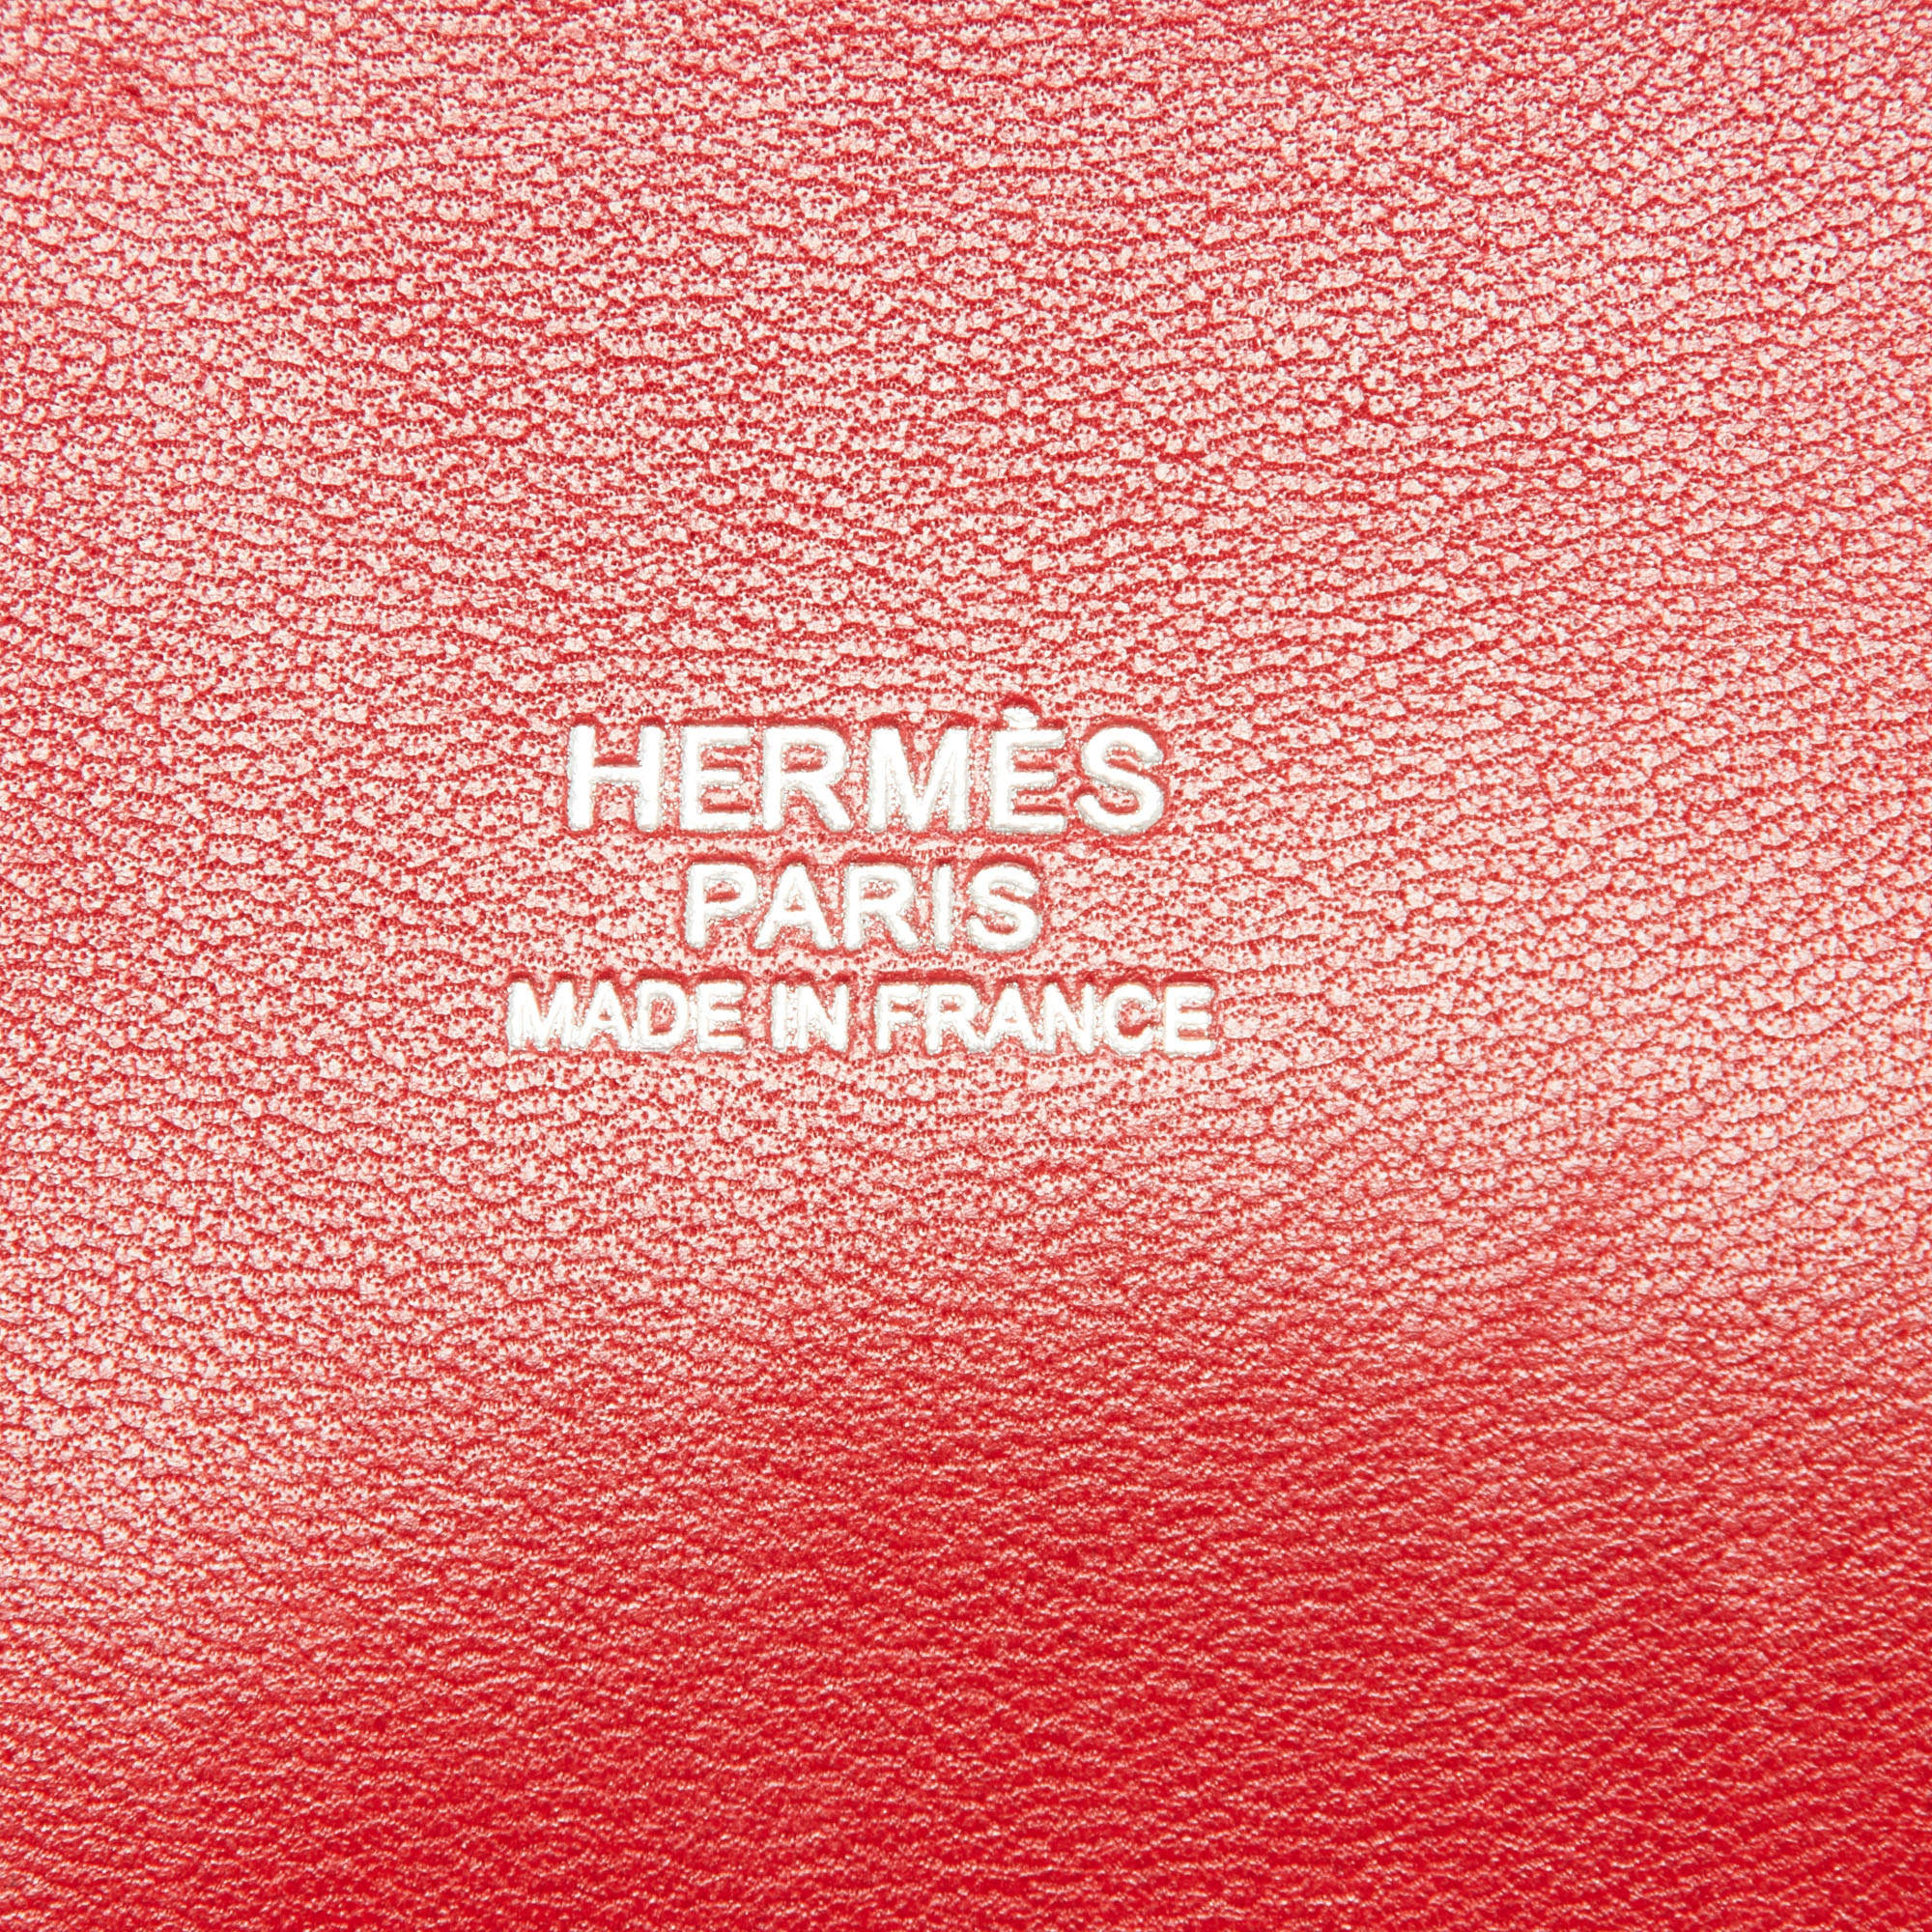 Rouge Casaque Bolide 35 - Hermès Street Style